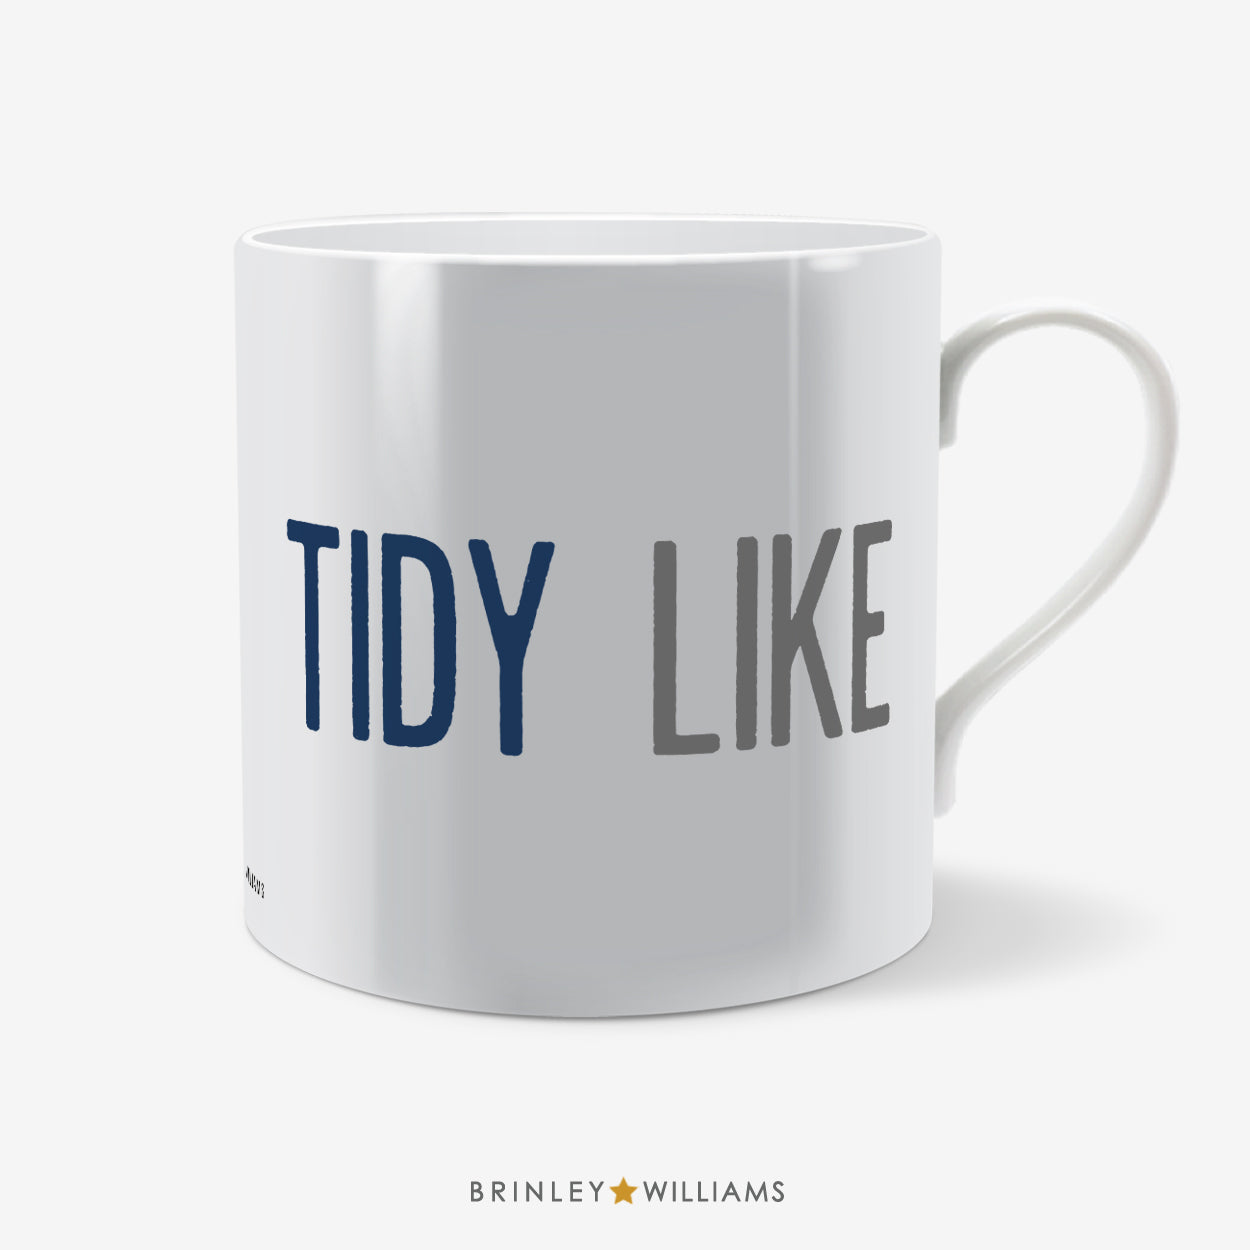 Tidy Like Welsh Mug - Navy